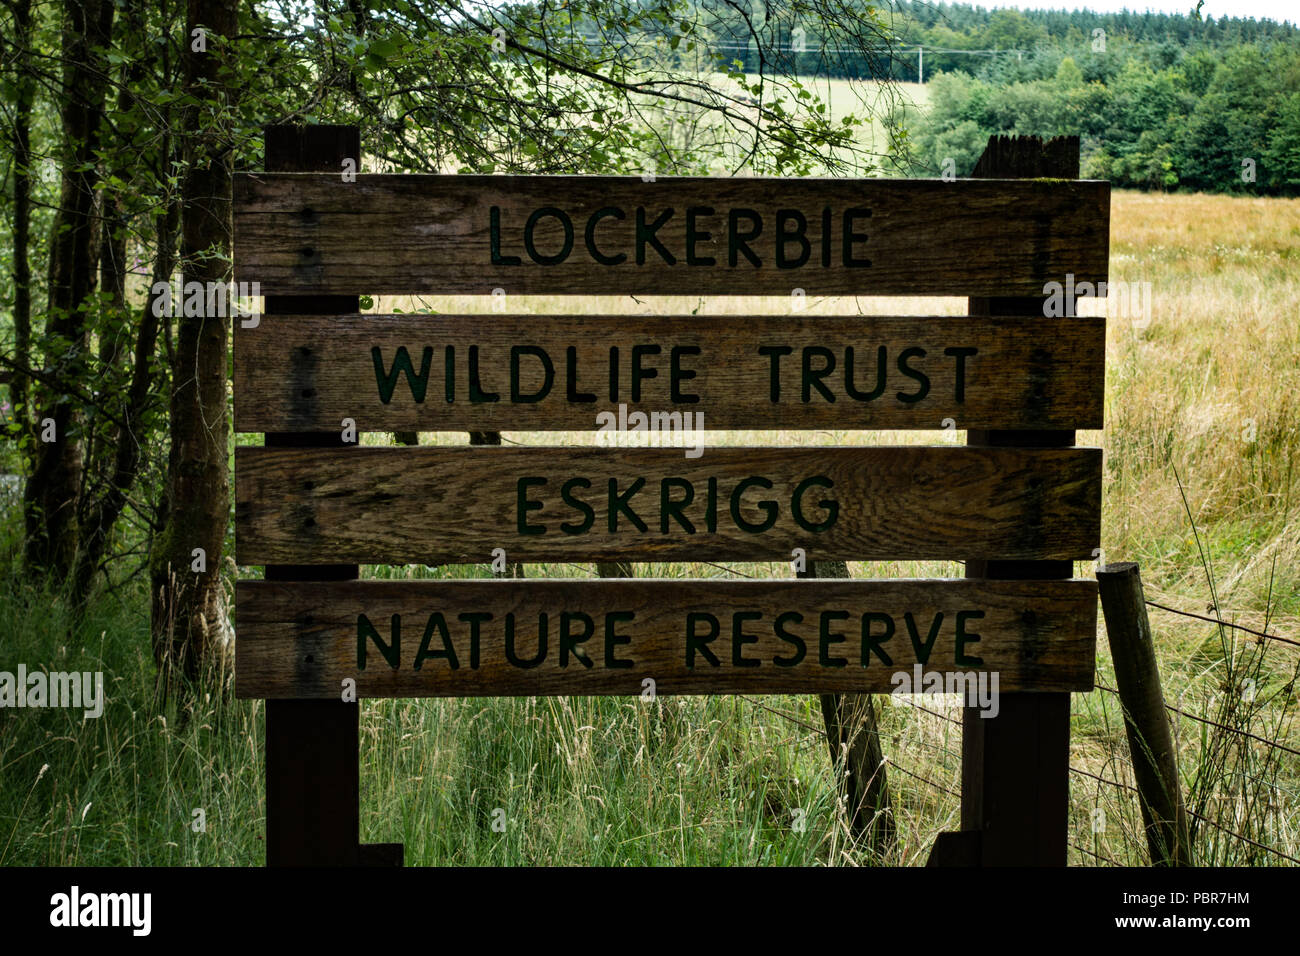 Sign board for Lockerbie Wildlife Trust. Eskrigg Nature Reserve.Scotland Stock Photo